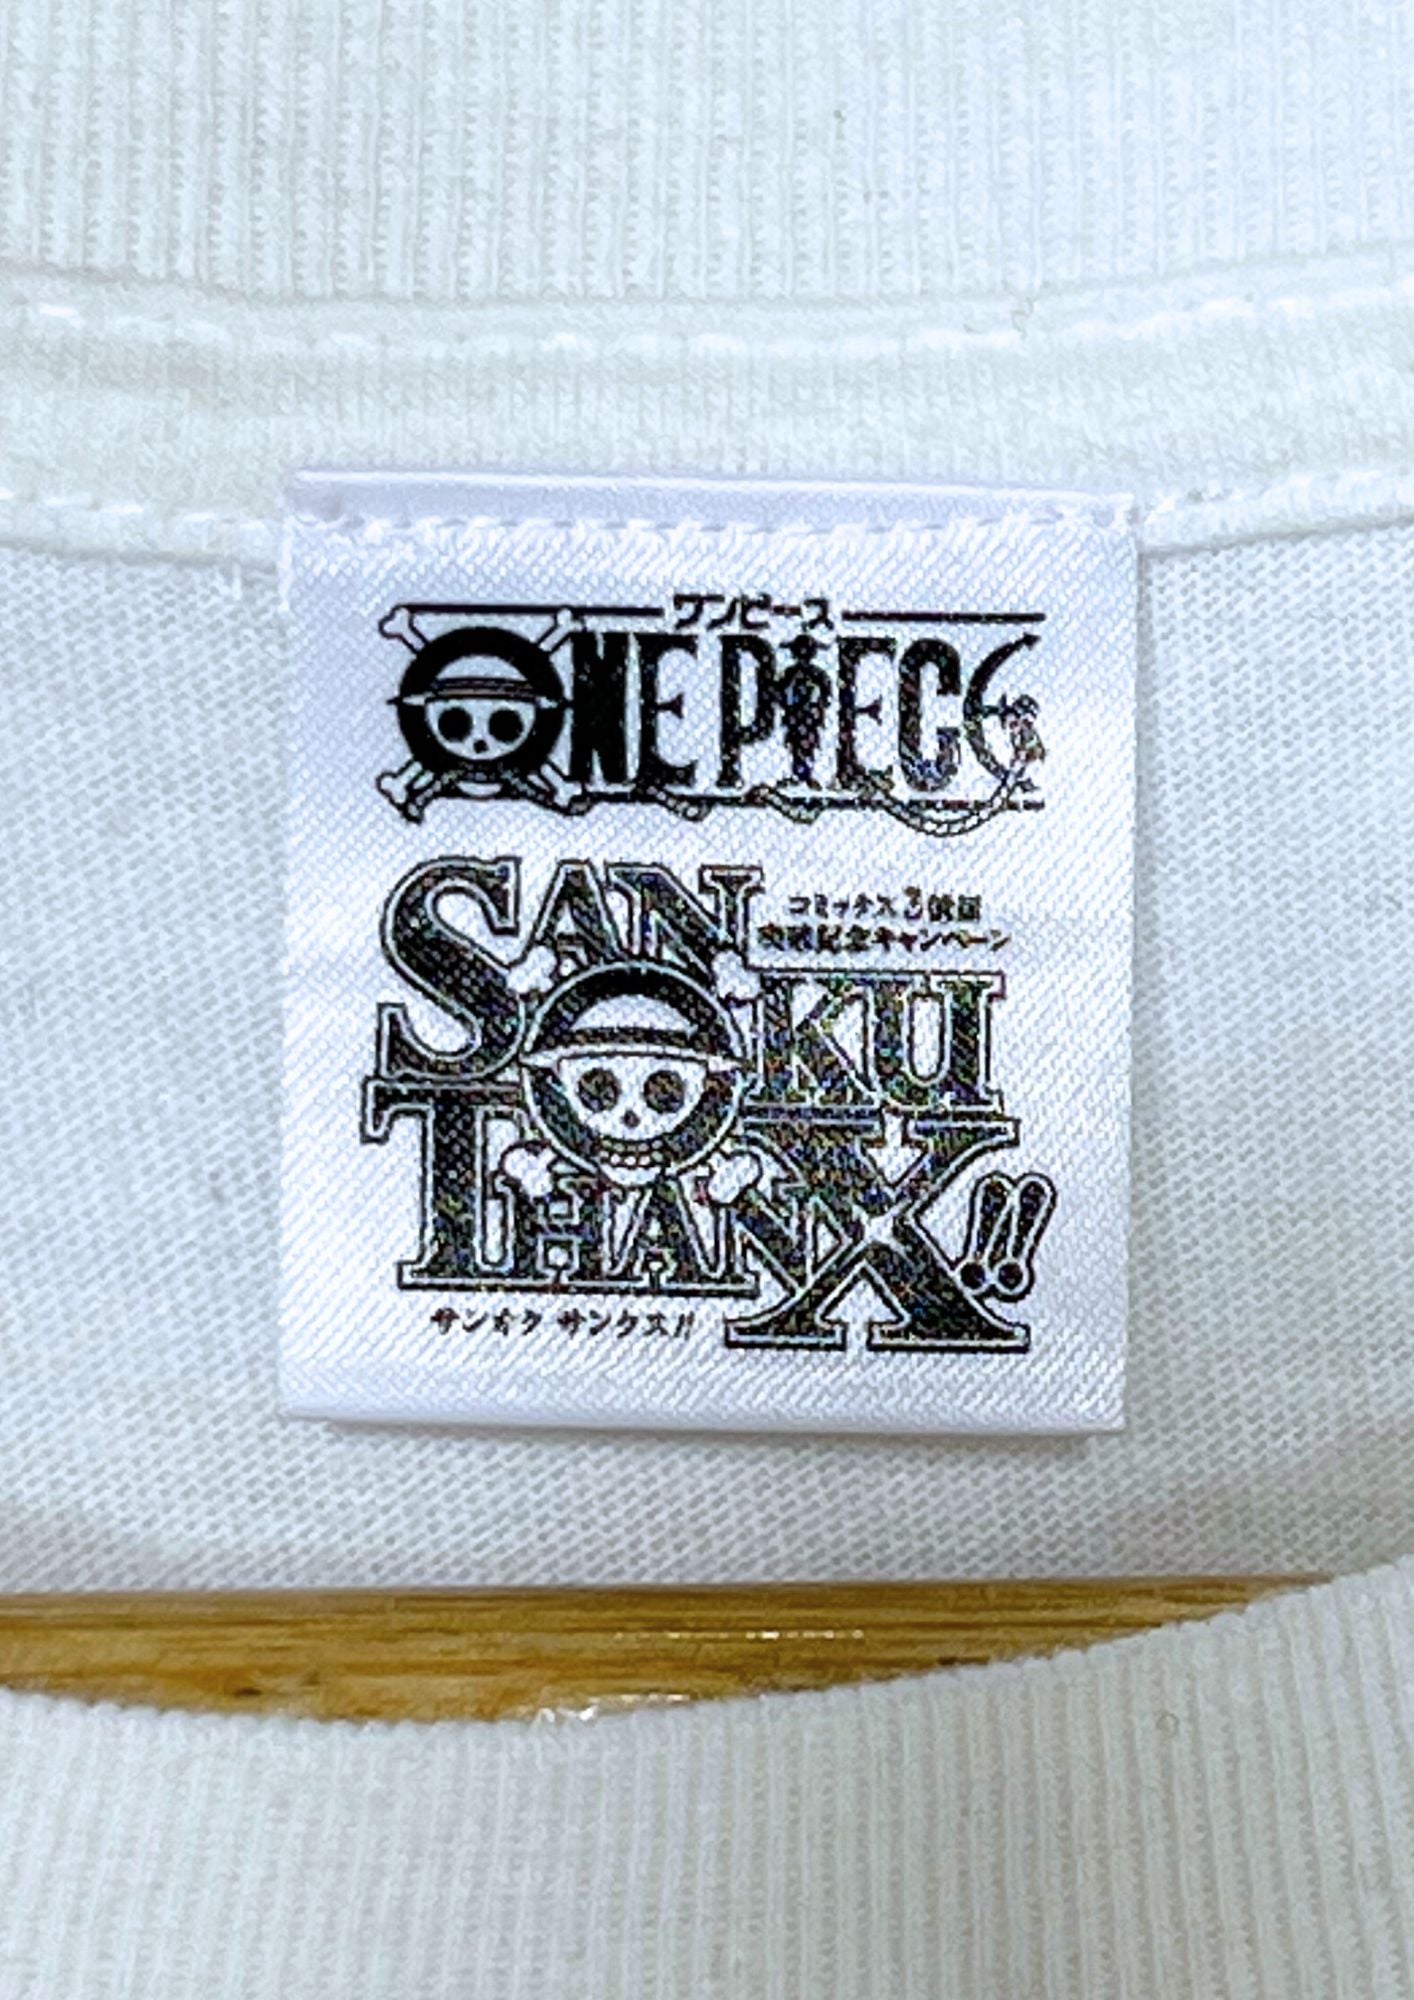 2014 One Piece x Shonen Jump 300 Limited Zoro x Hokkaido Lottery T-shirt